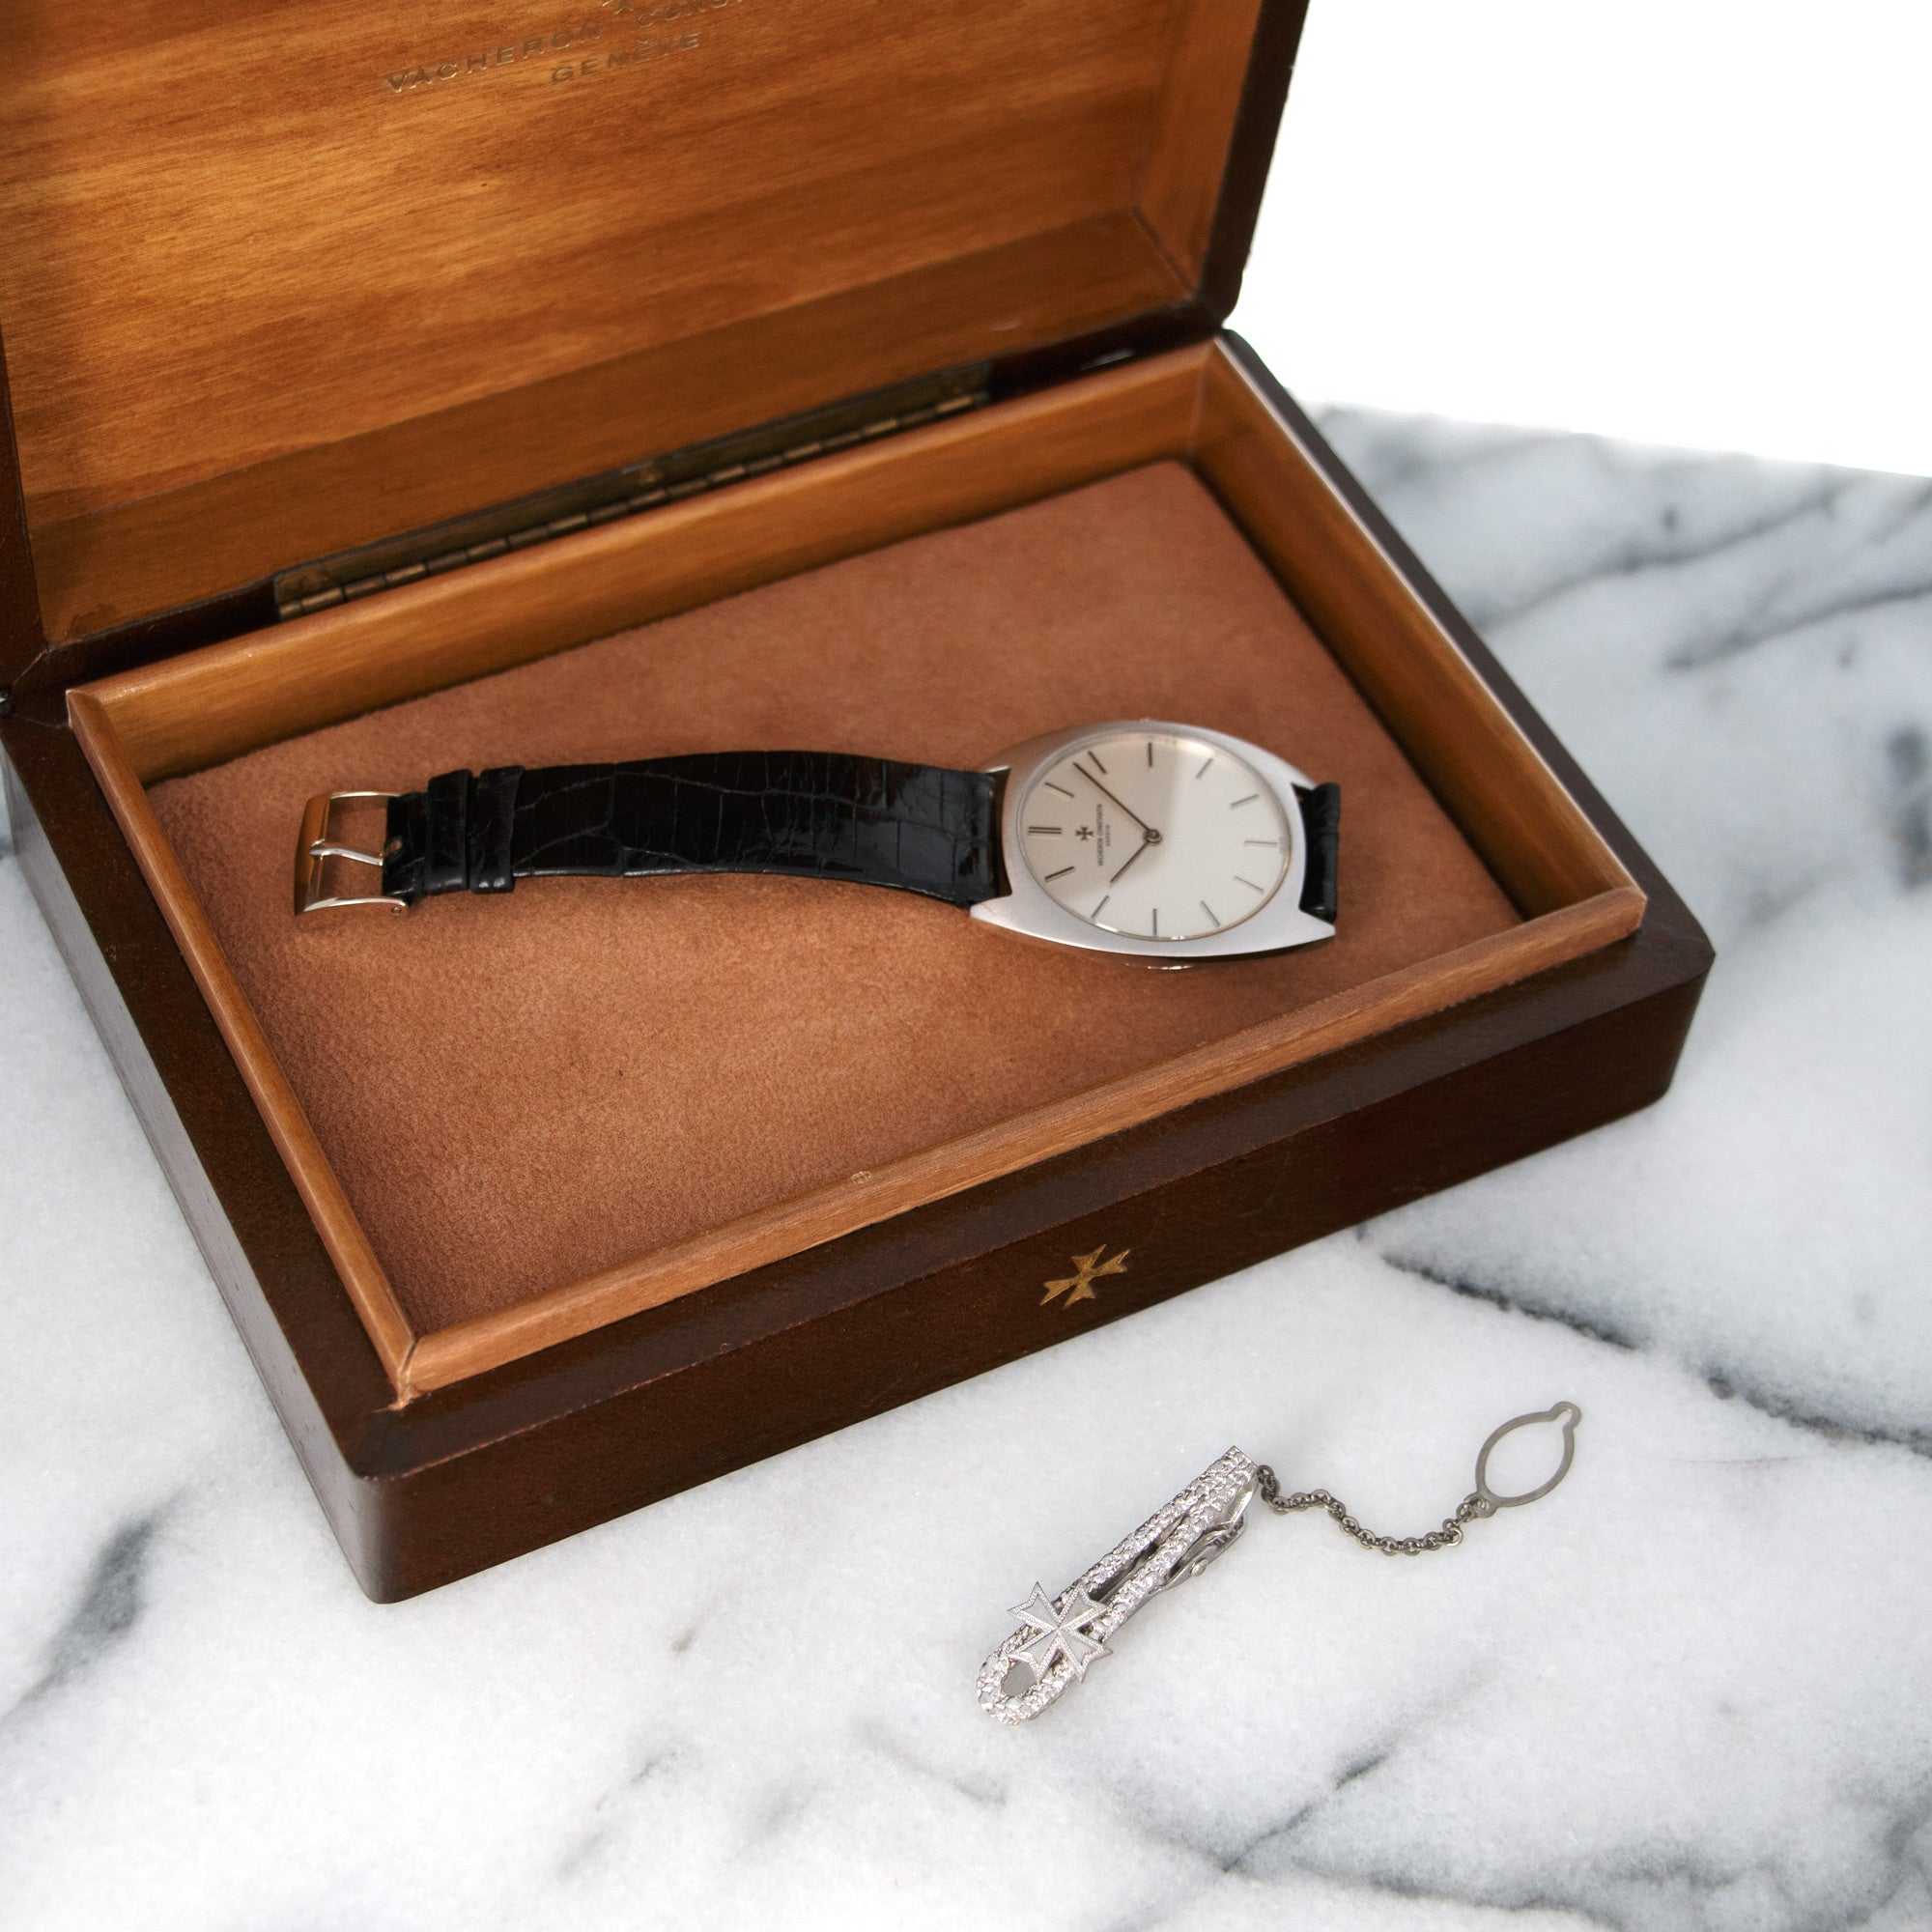 Vacheron Constantin - Vacheron Constantin White Gold Mechanical Watch in Original Box - The Keystone Watches